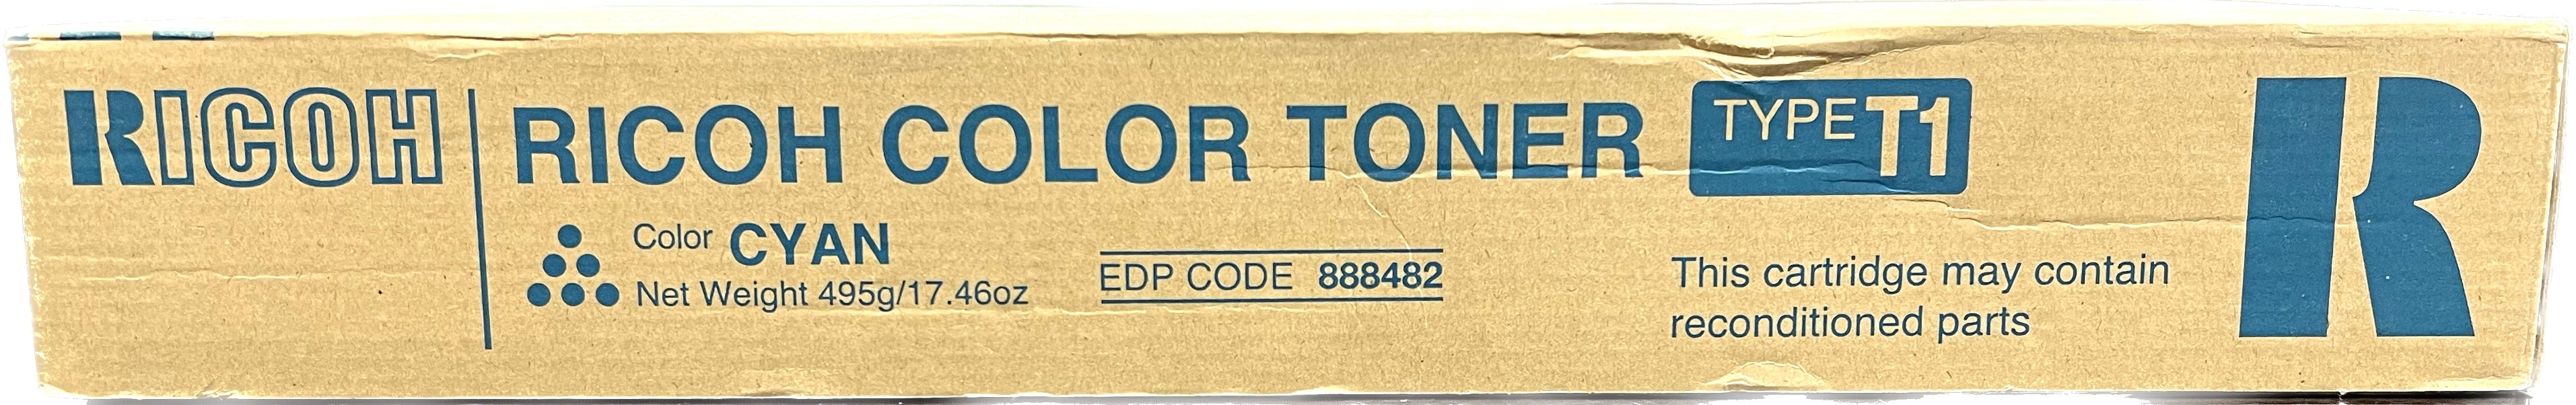 Genuine Ricoh Cyan Color Toner | 888482 | Type T1